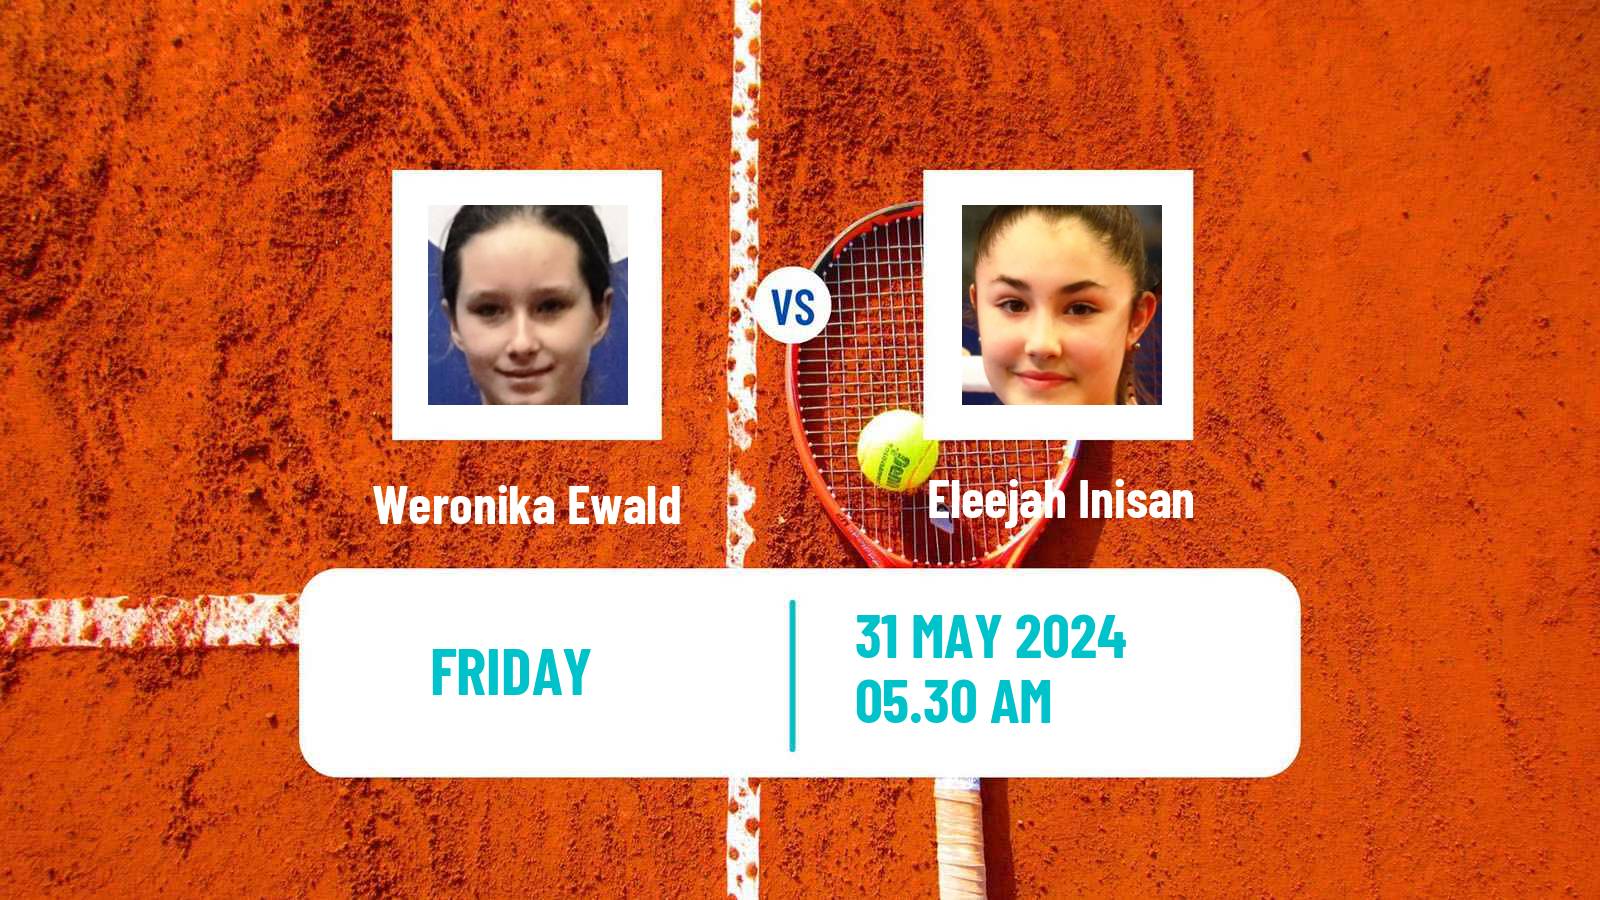 Tennis ITF W15 Bol 2 Women Weronika Ewald - Eleejah Inisan